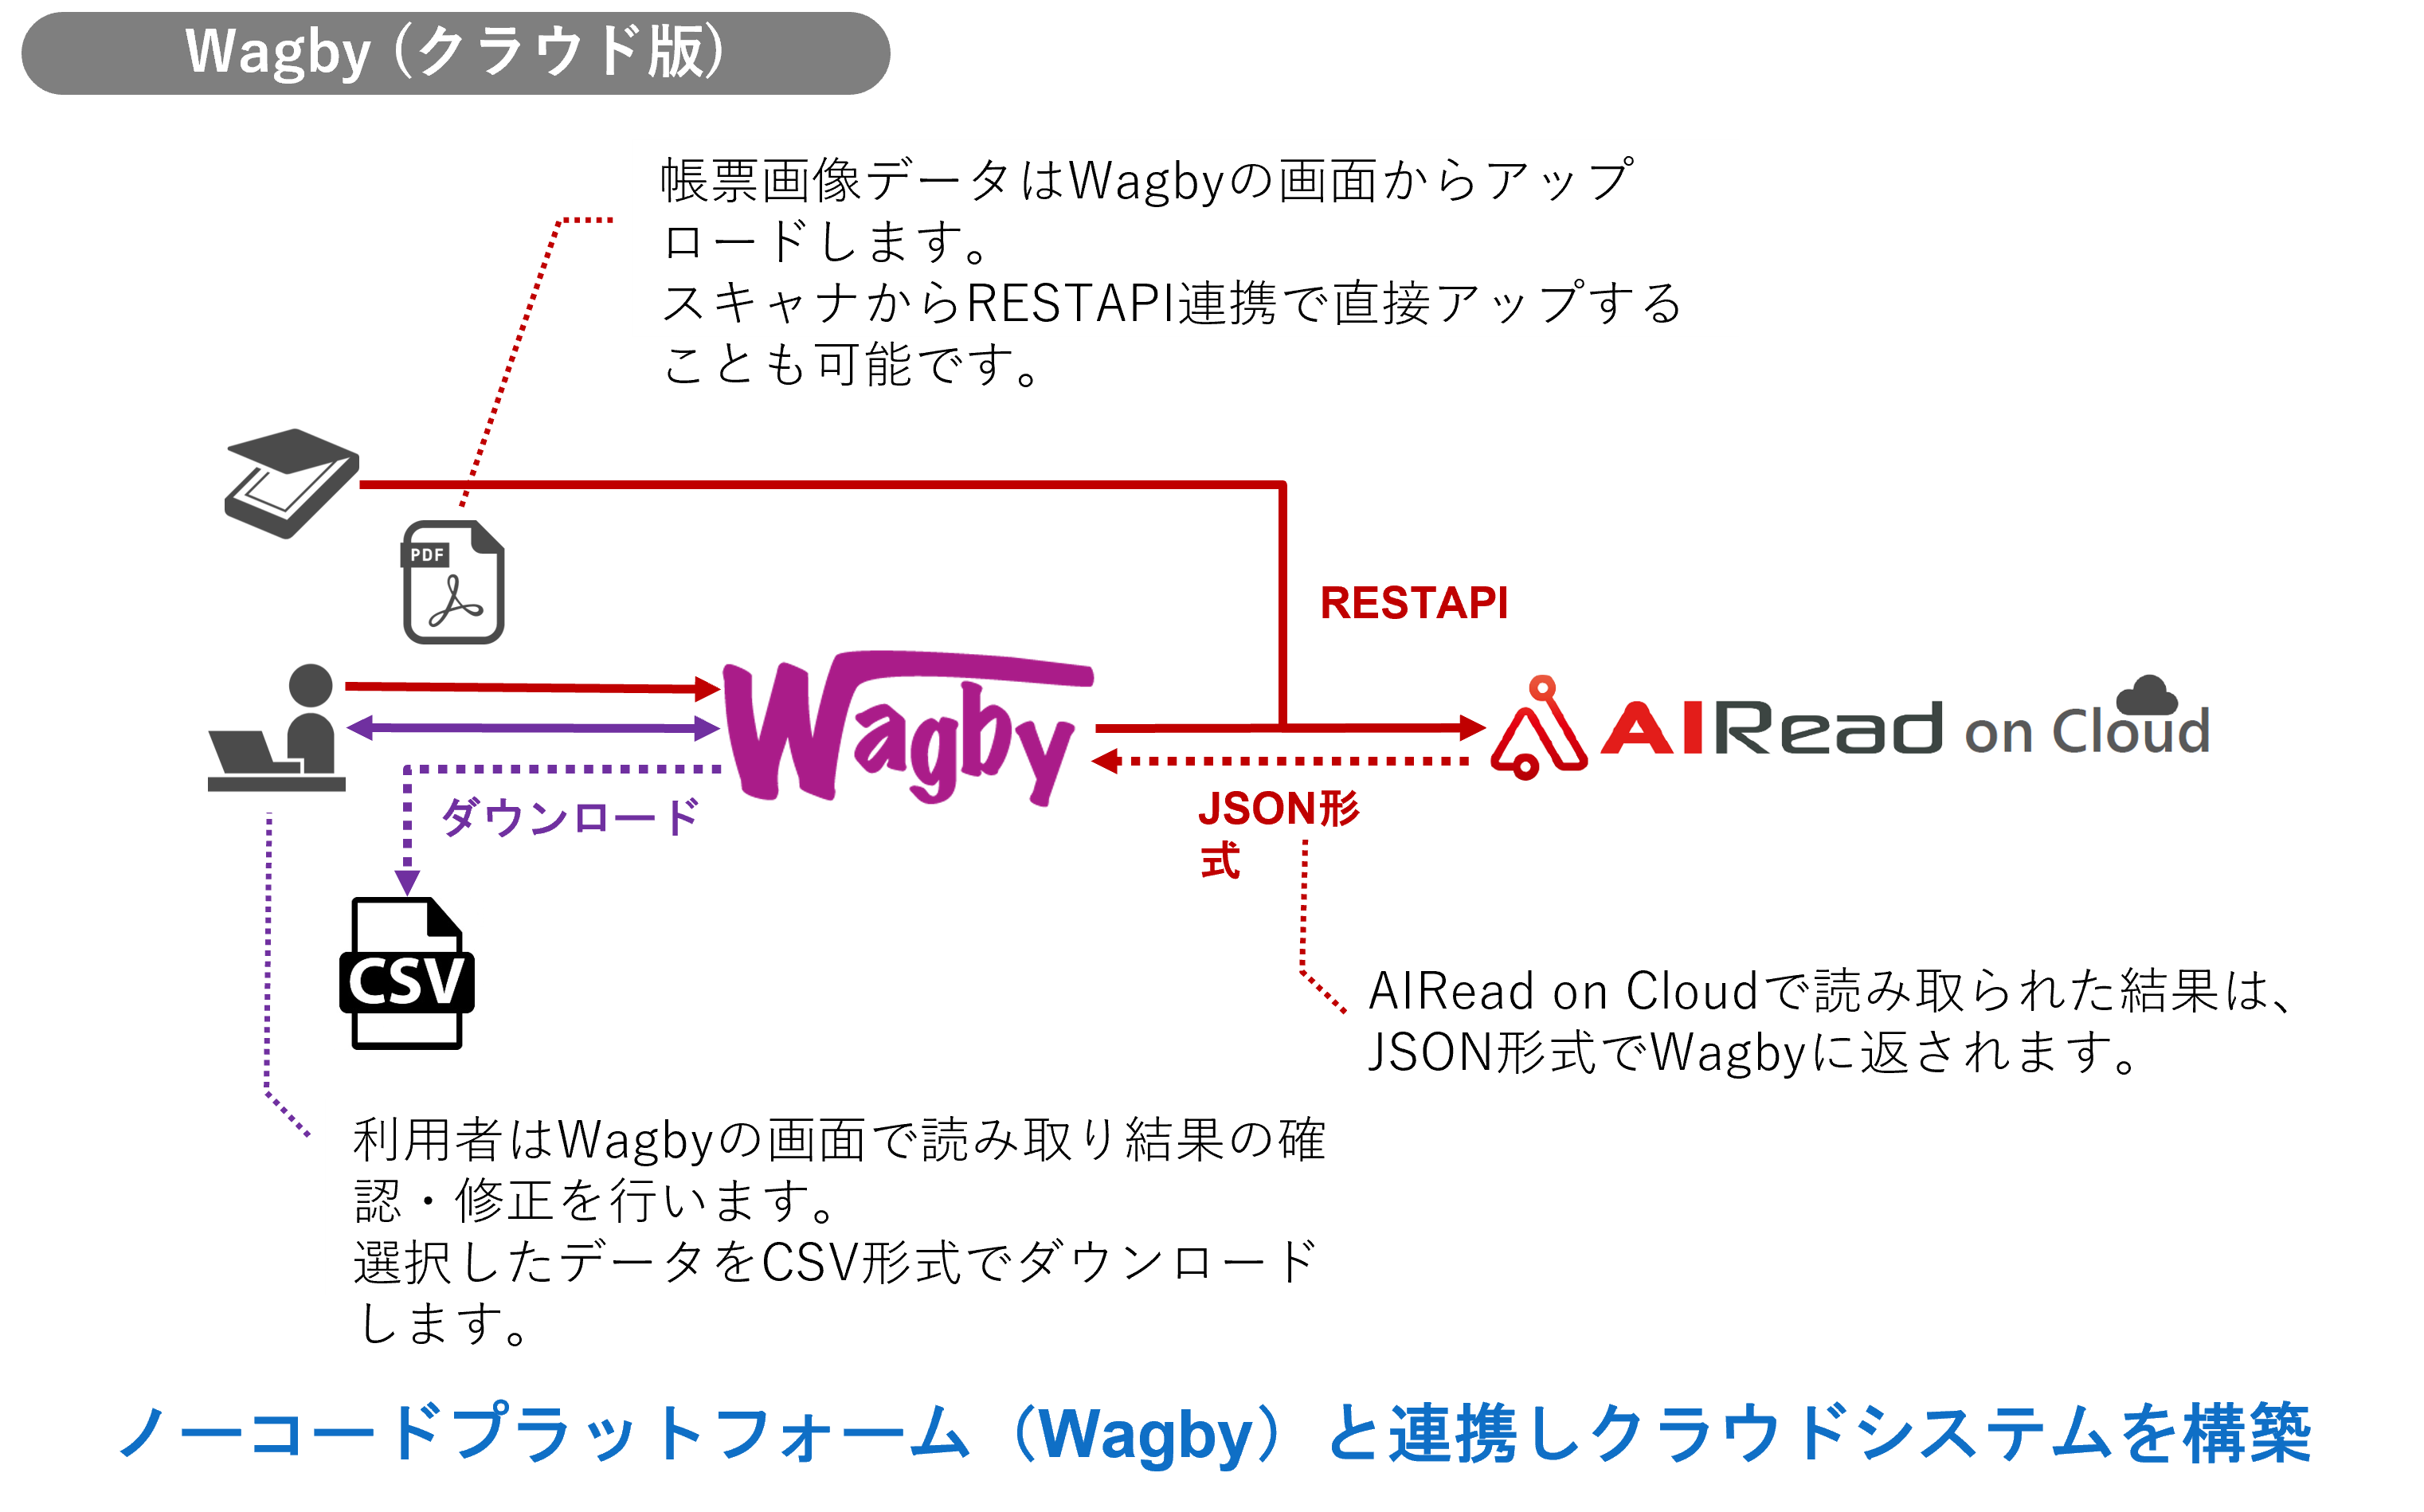 Wagby と AIRead on Cloud がRESTAPIで連携可能